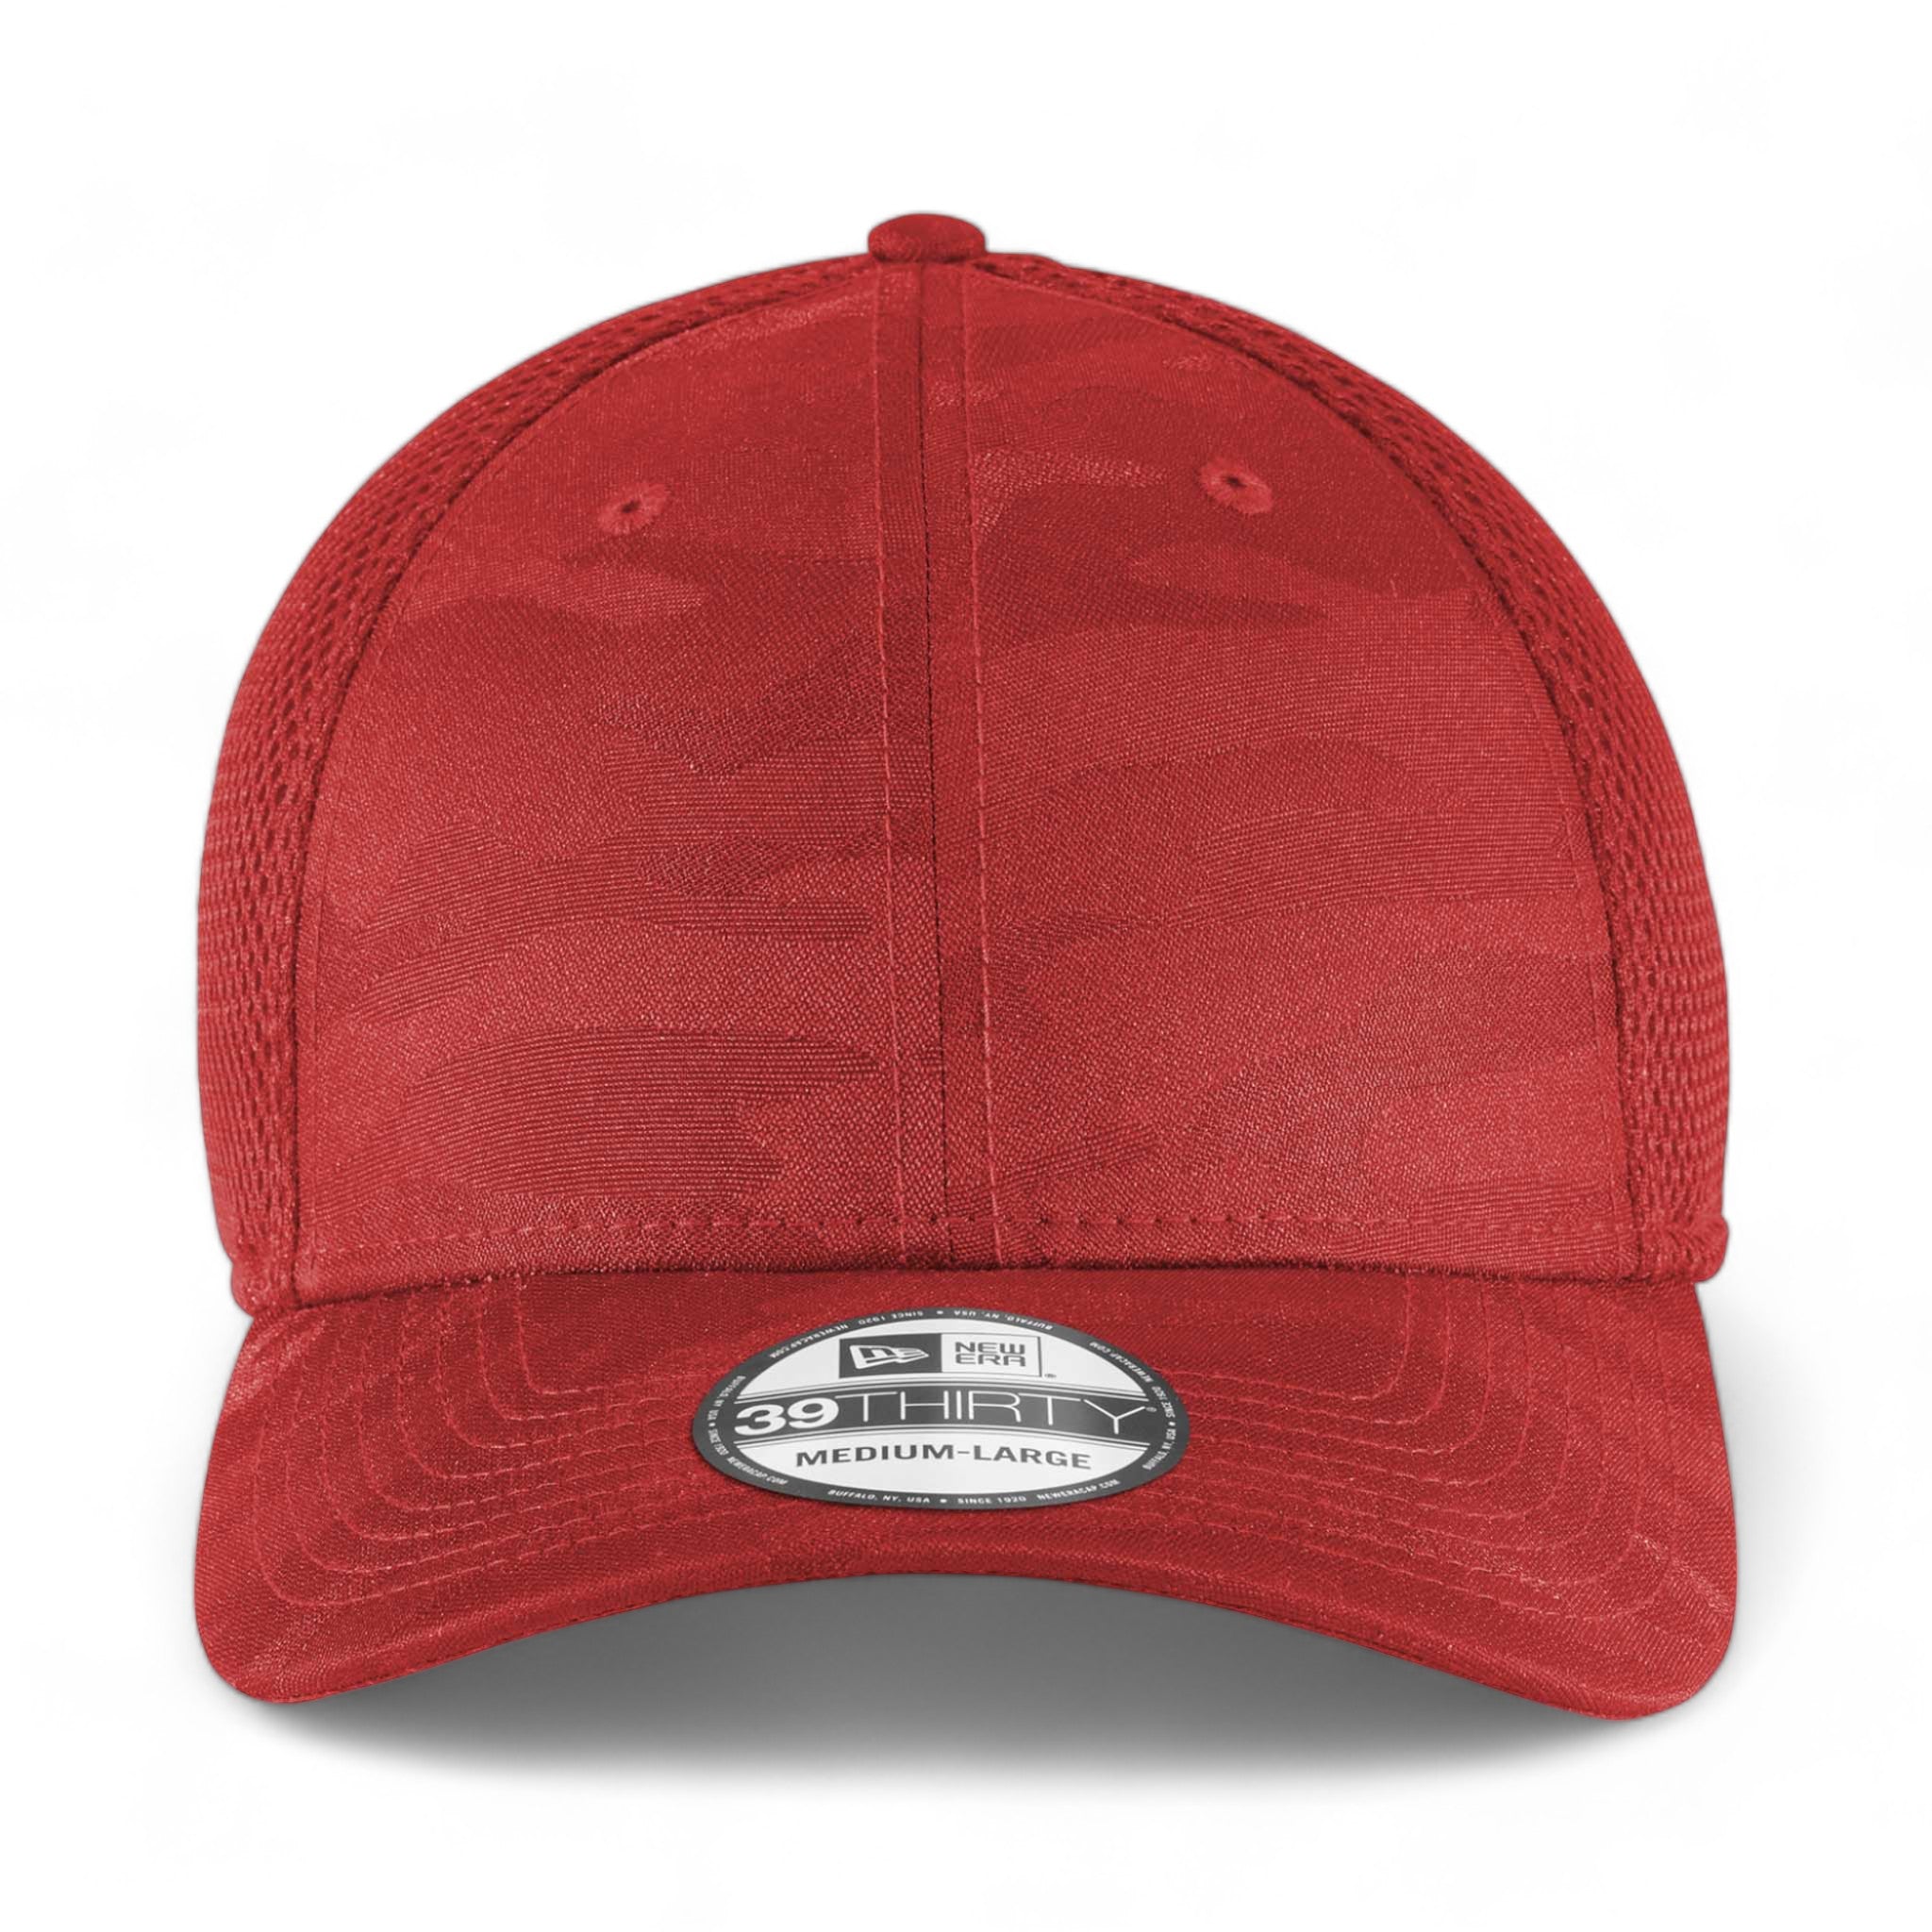 Front view of New Era NE1091 custom hat in red camo